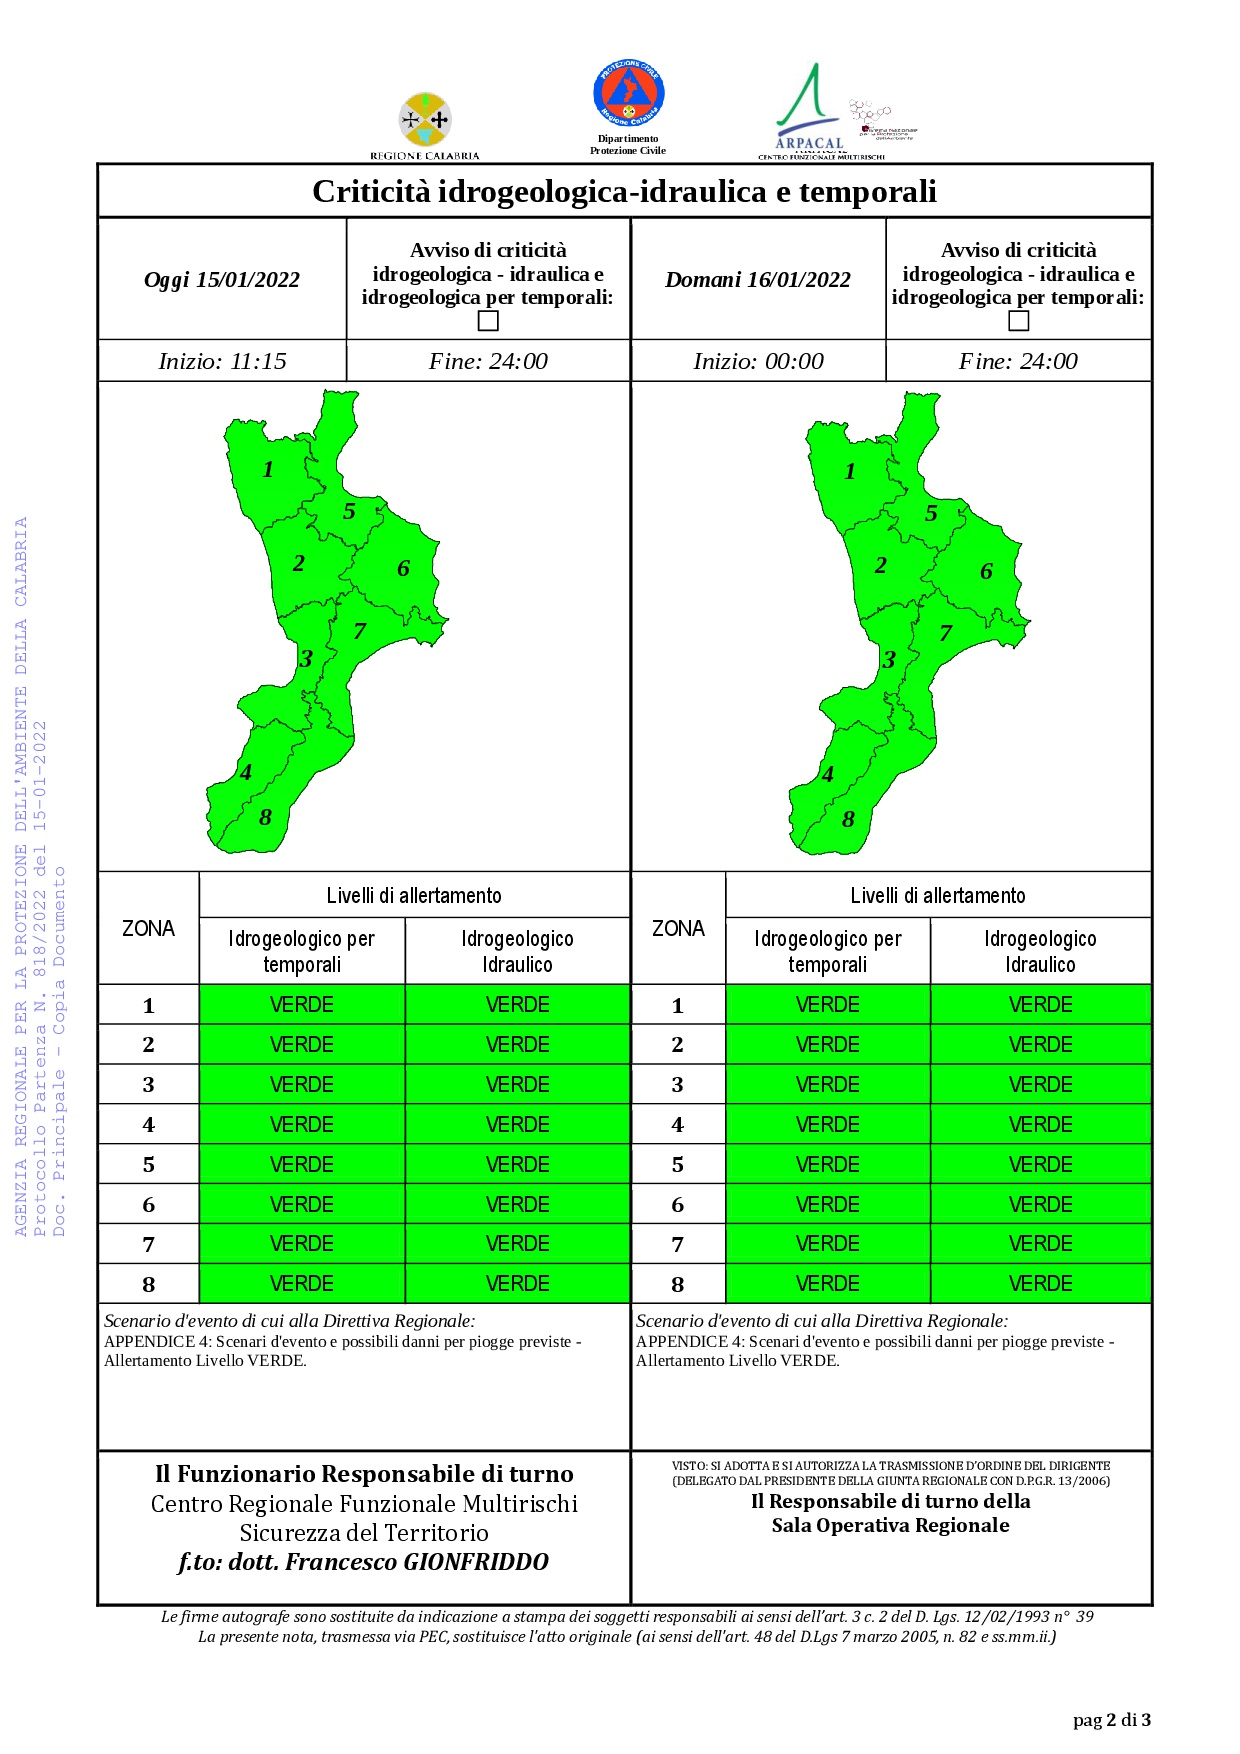 Criticità idrogeologica-idraulica e temporali in Calabria 15-01-2022